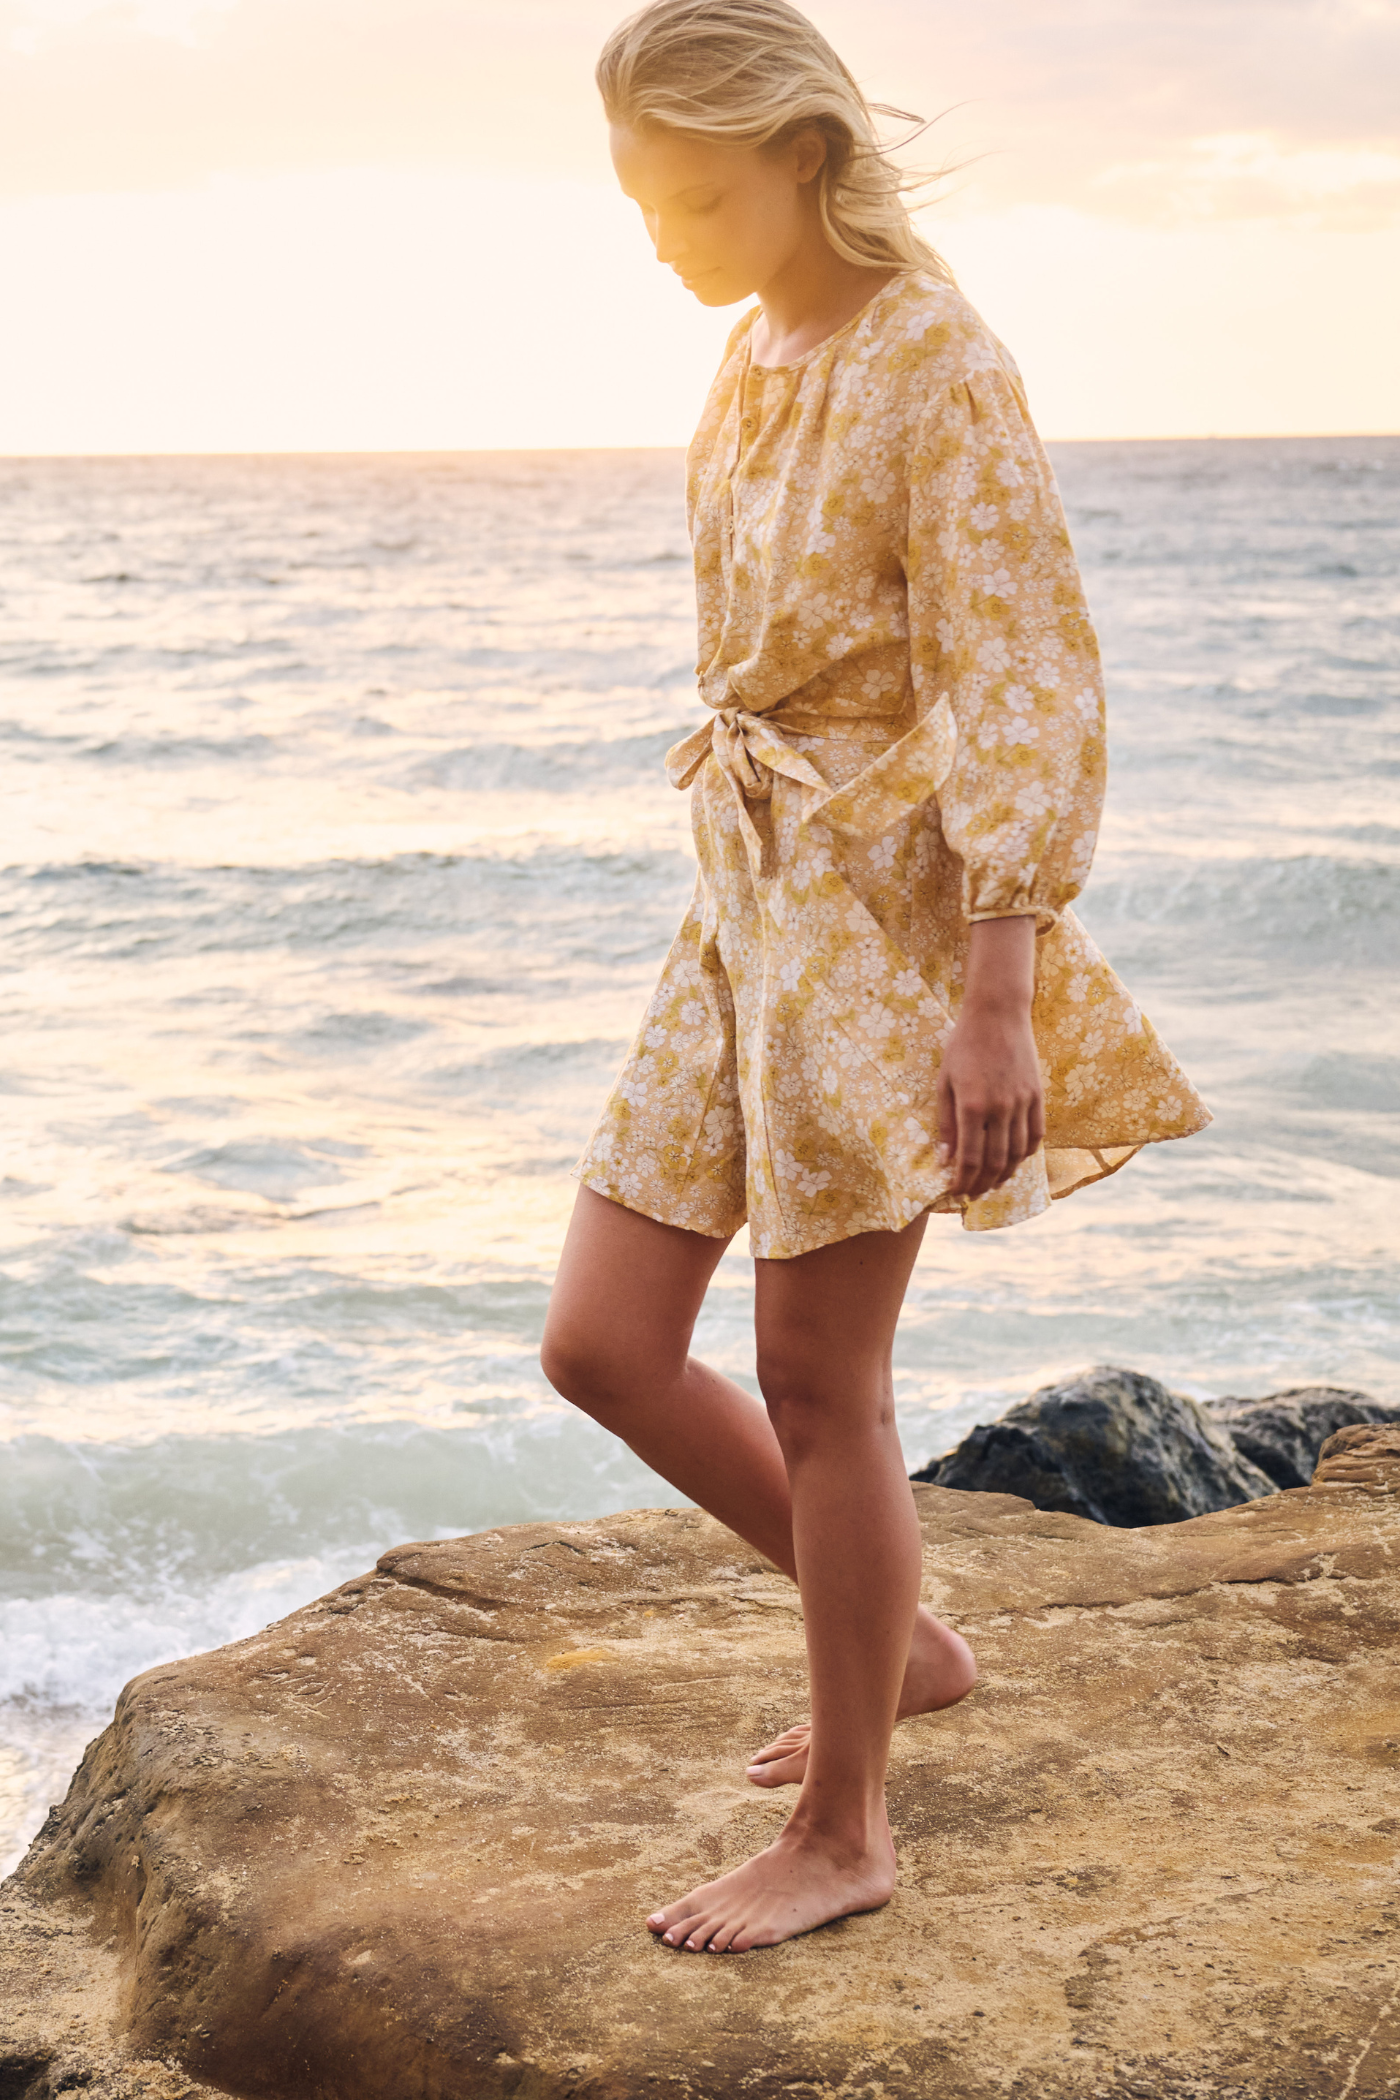 Model at beach wearing flowing mini dress